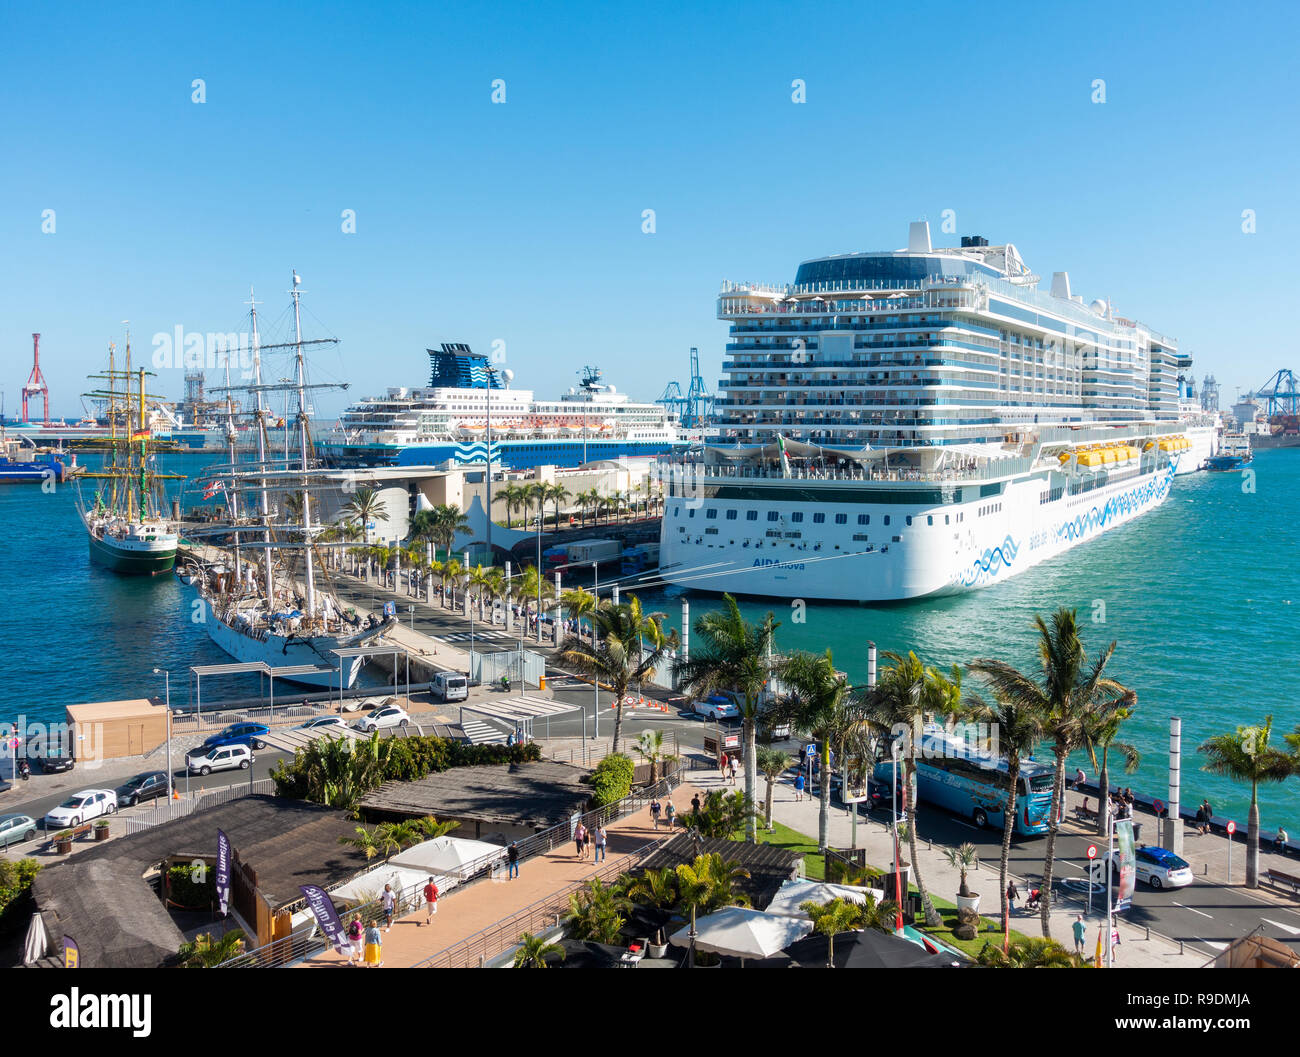 Aidanova/Aida Nova cruise ship in Las Palmas port on Gran Canaria, Canay  Islands, Spain. December 2018 Stock Photo - Alamy